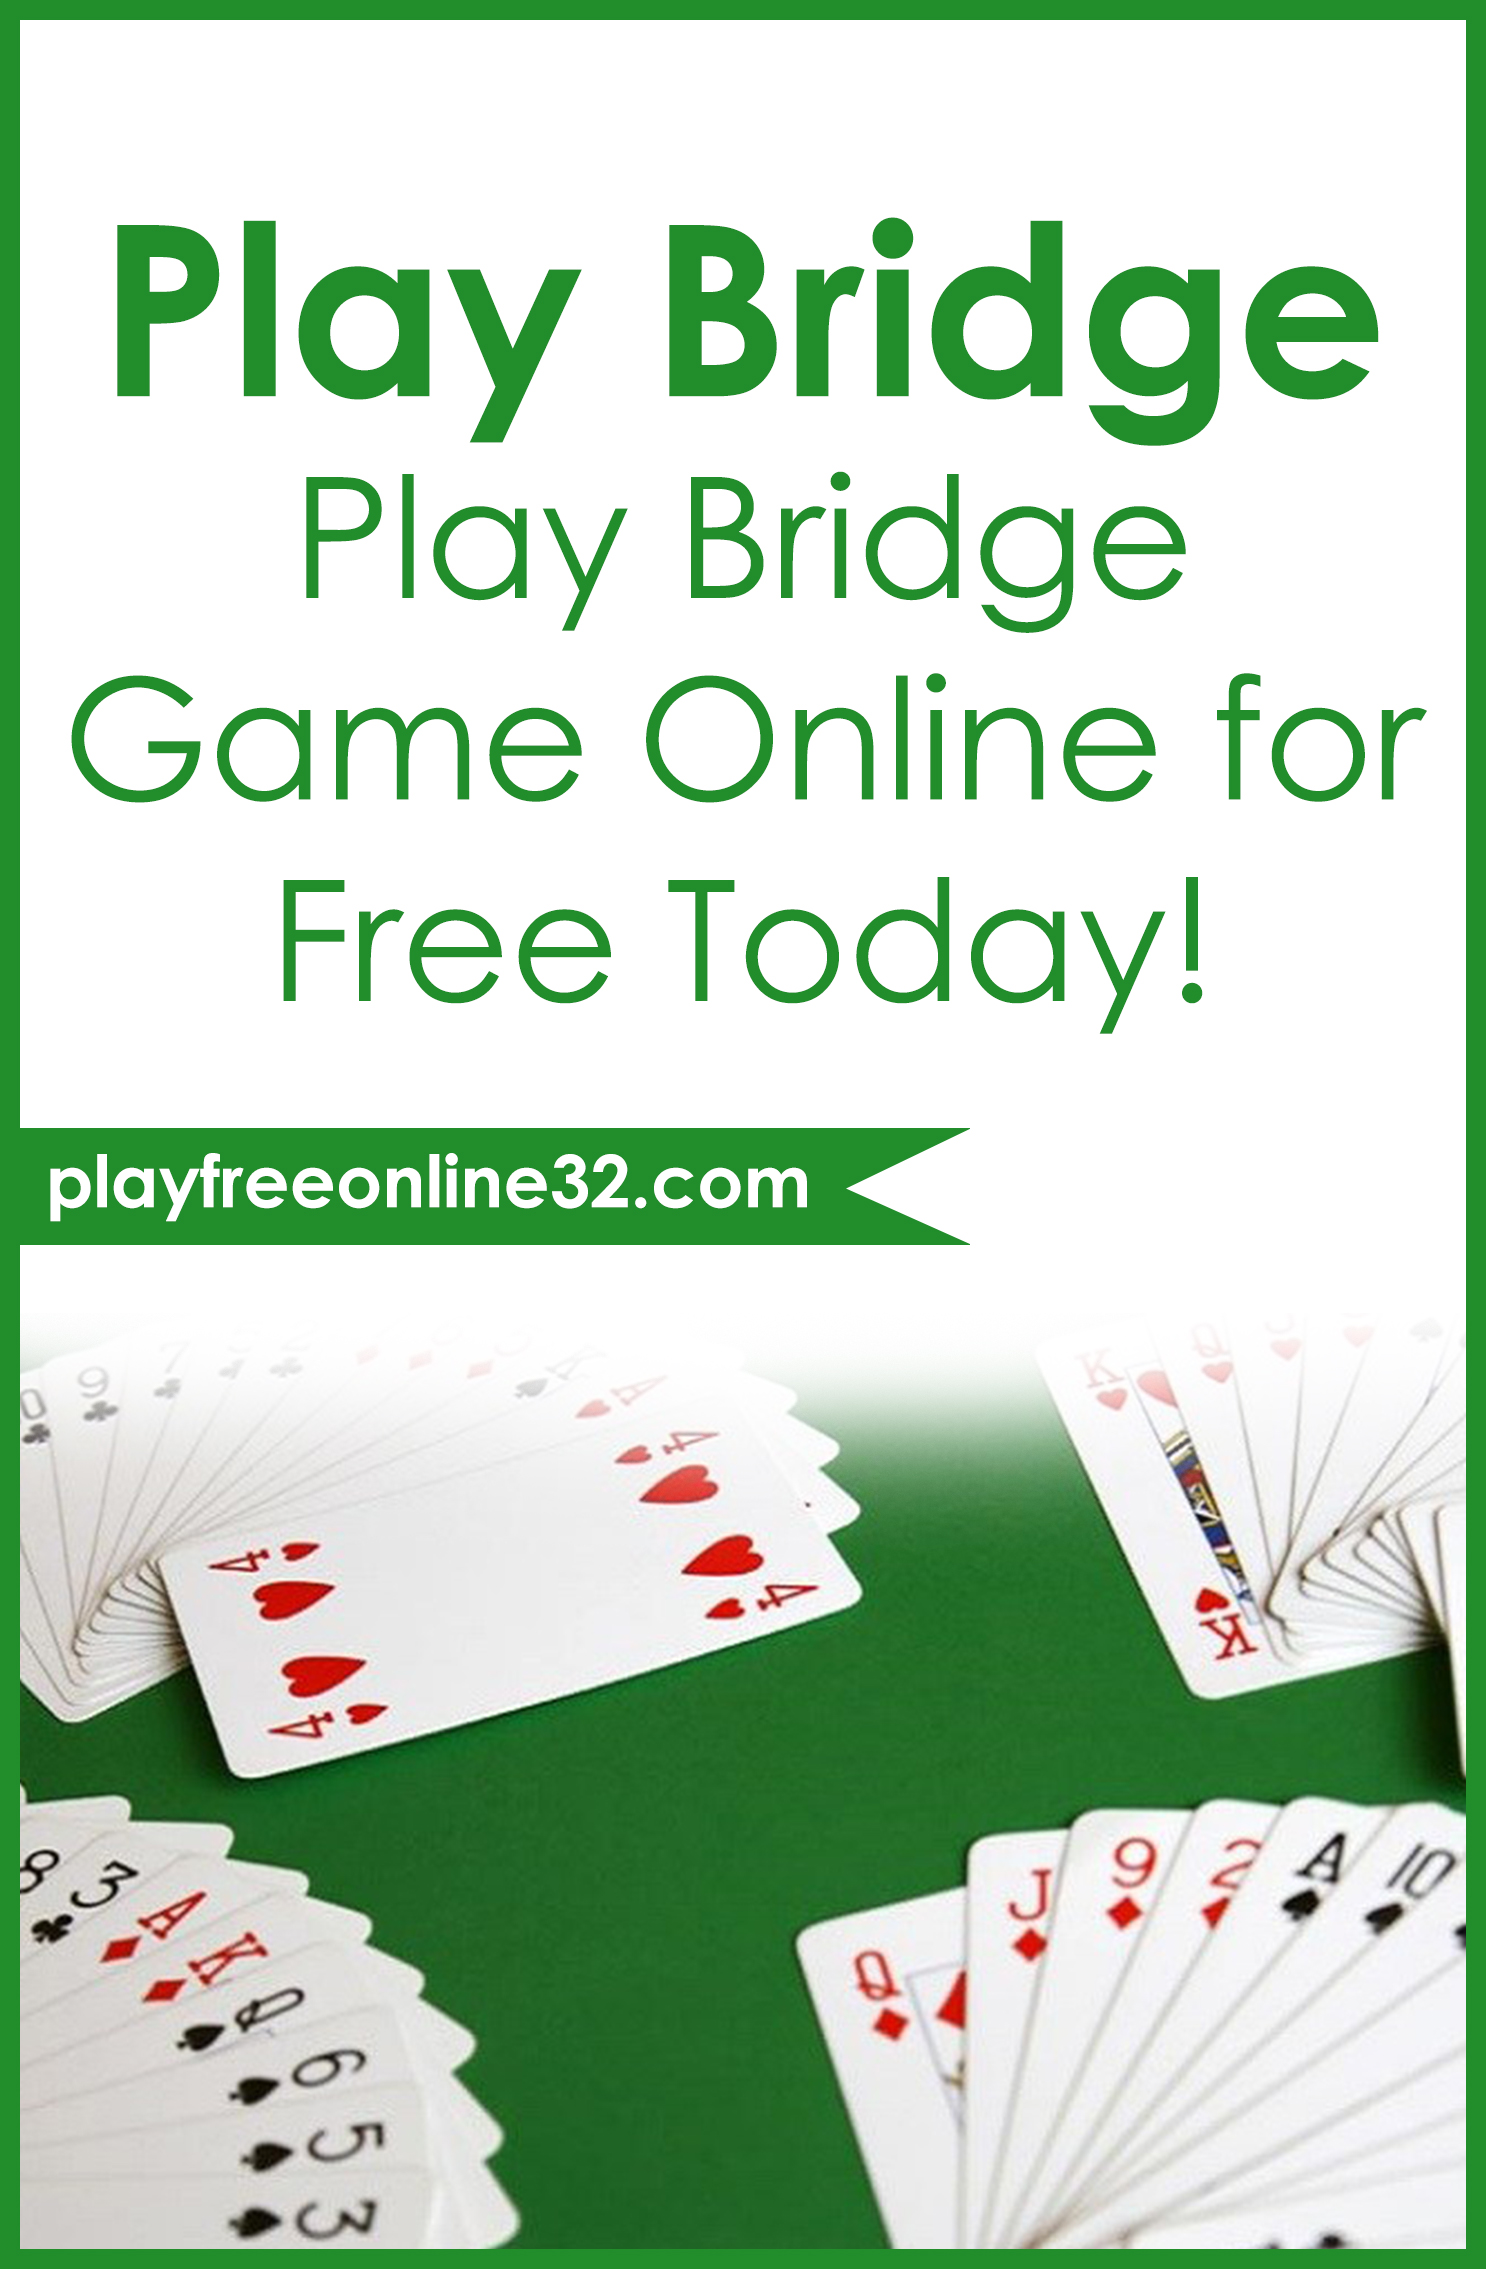 Play Bridge Online • Play Bridge Game Online for Free Today!